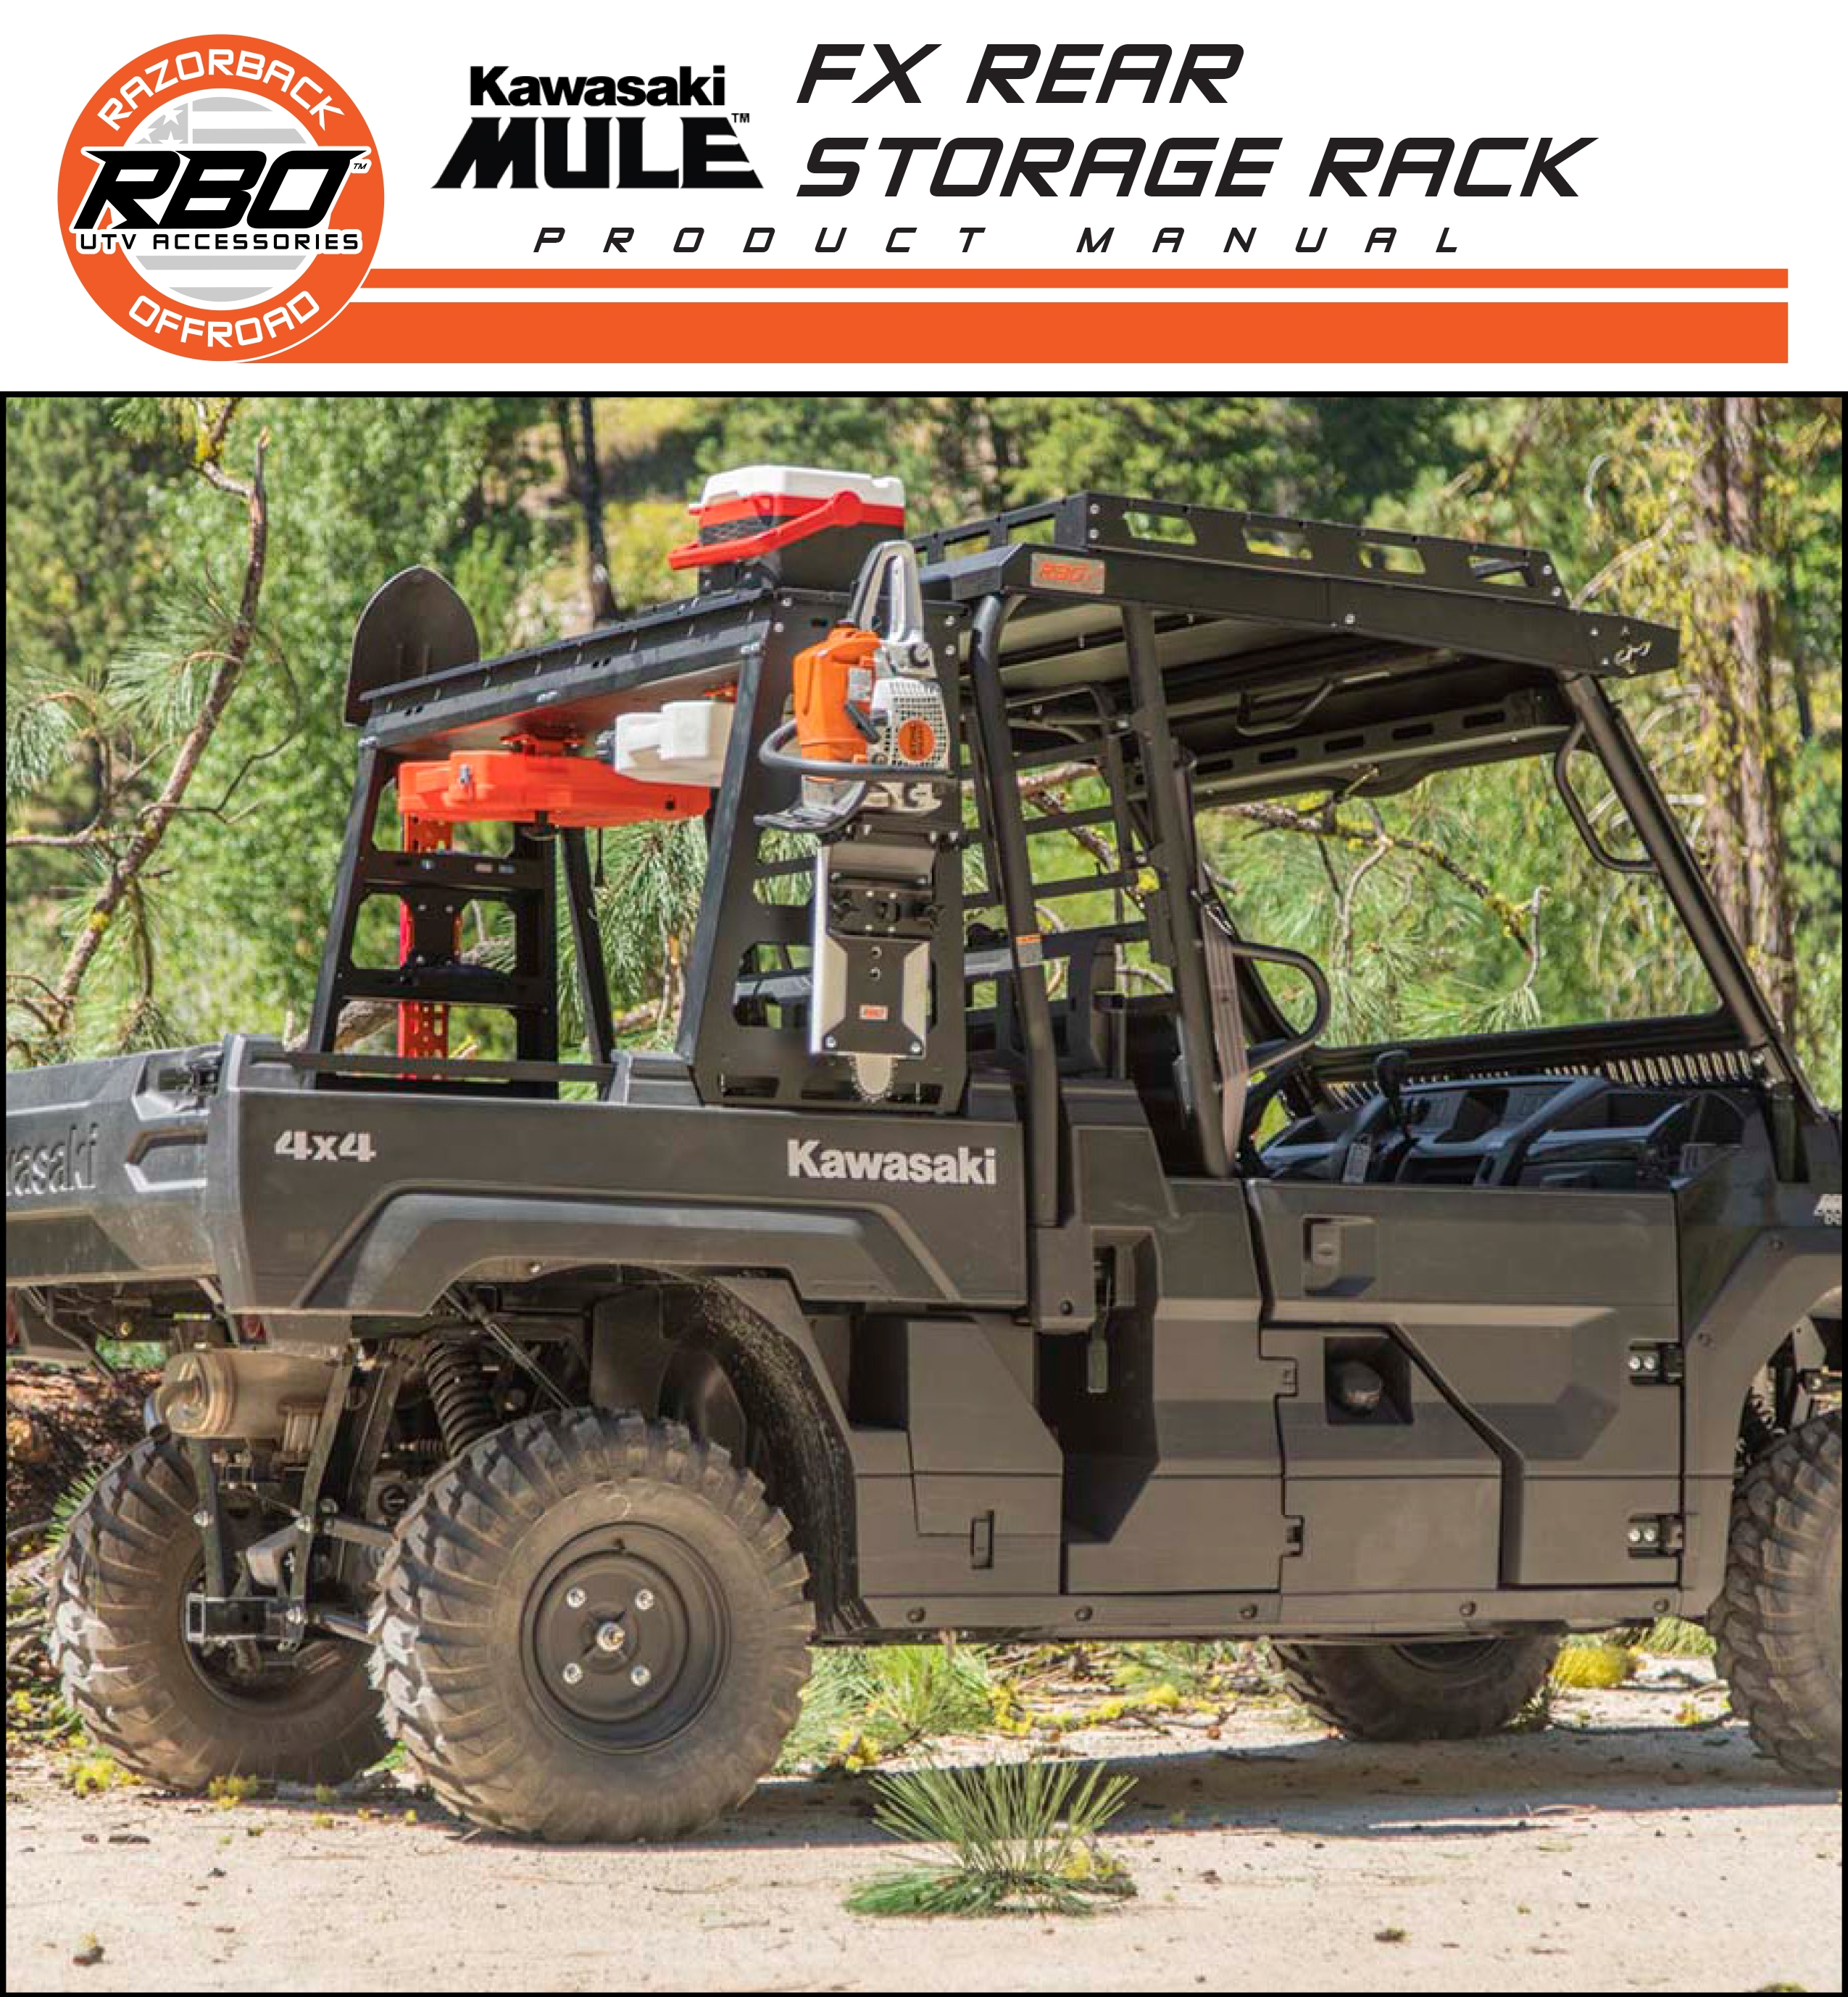 RBO Kawasaki Mule FX Rear Storage Rack Product Manual